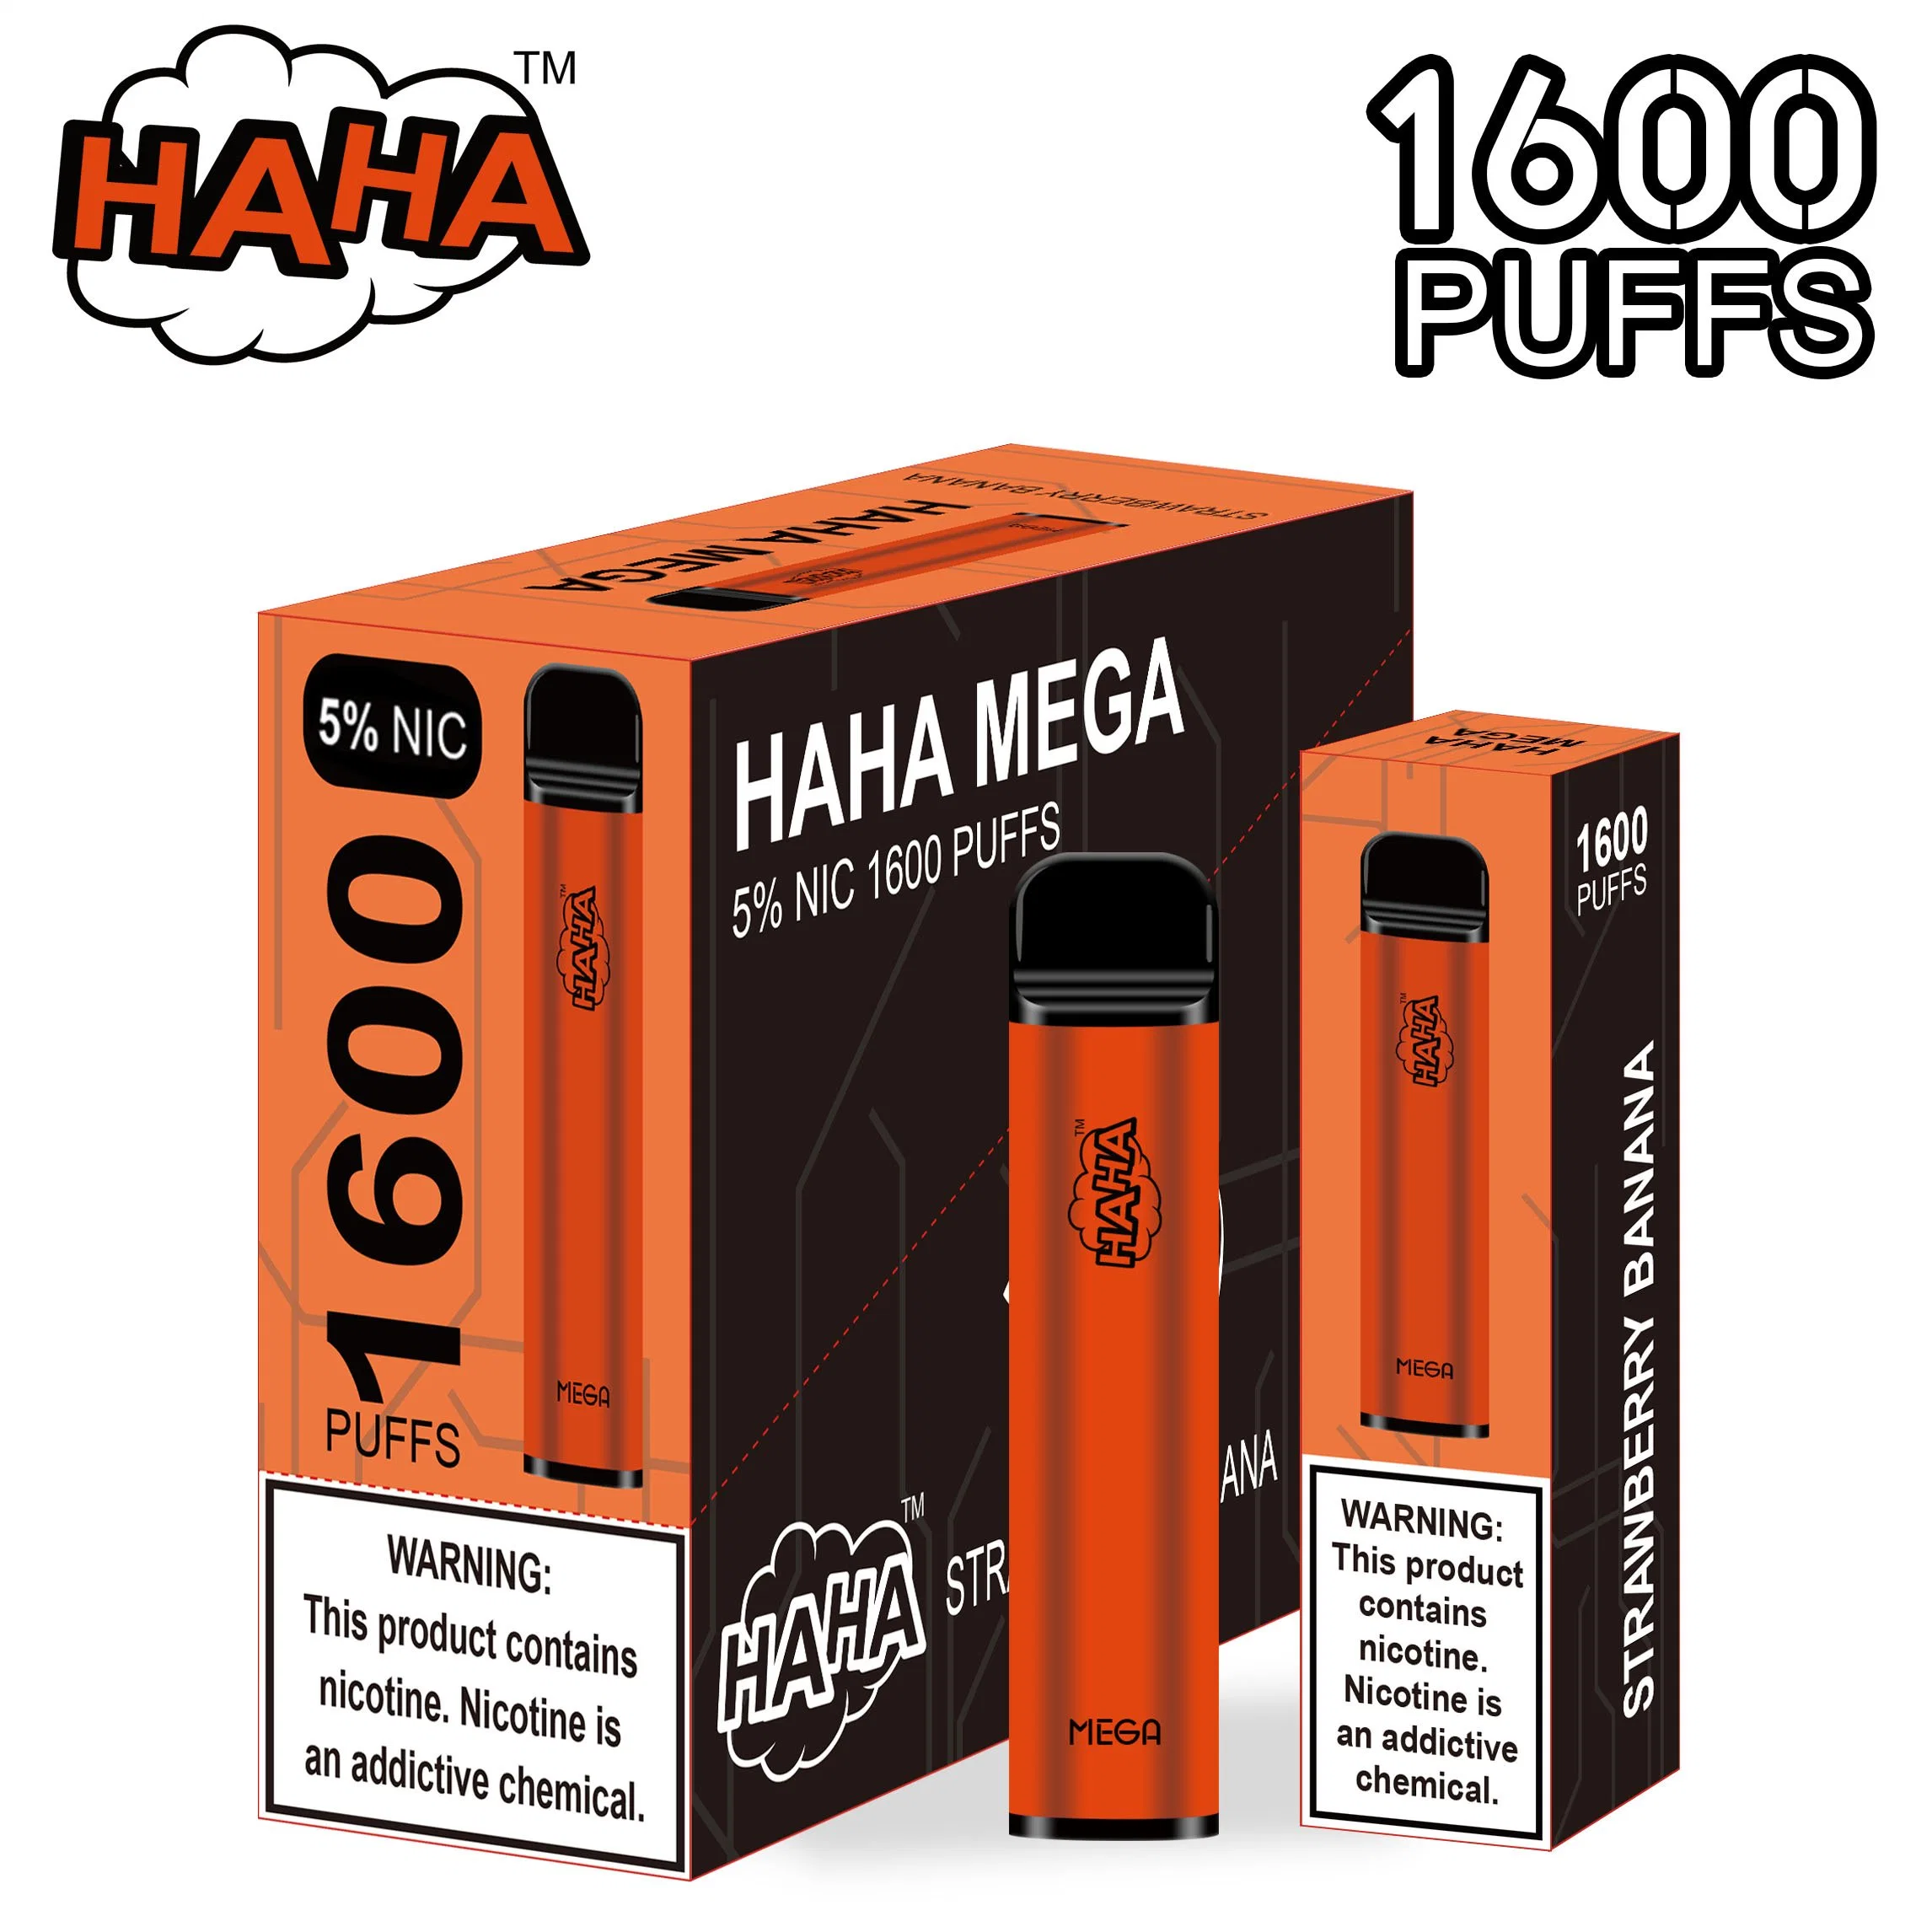 Aokit 1600 Puffs Haha Mega Smoking Vape Disposable Cigarette OEM Available